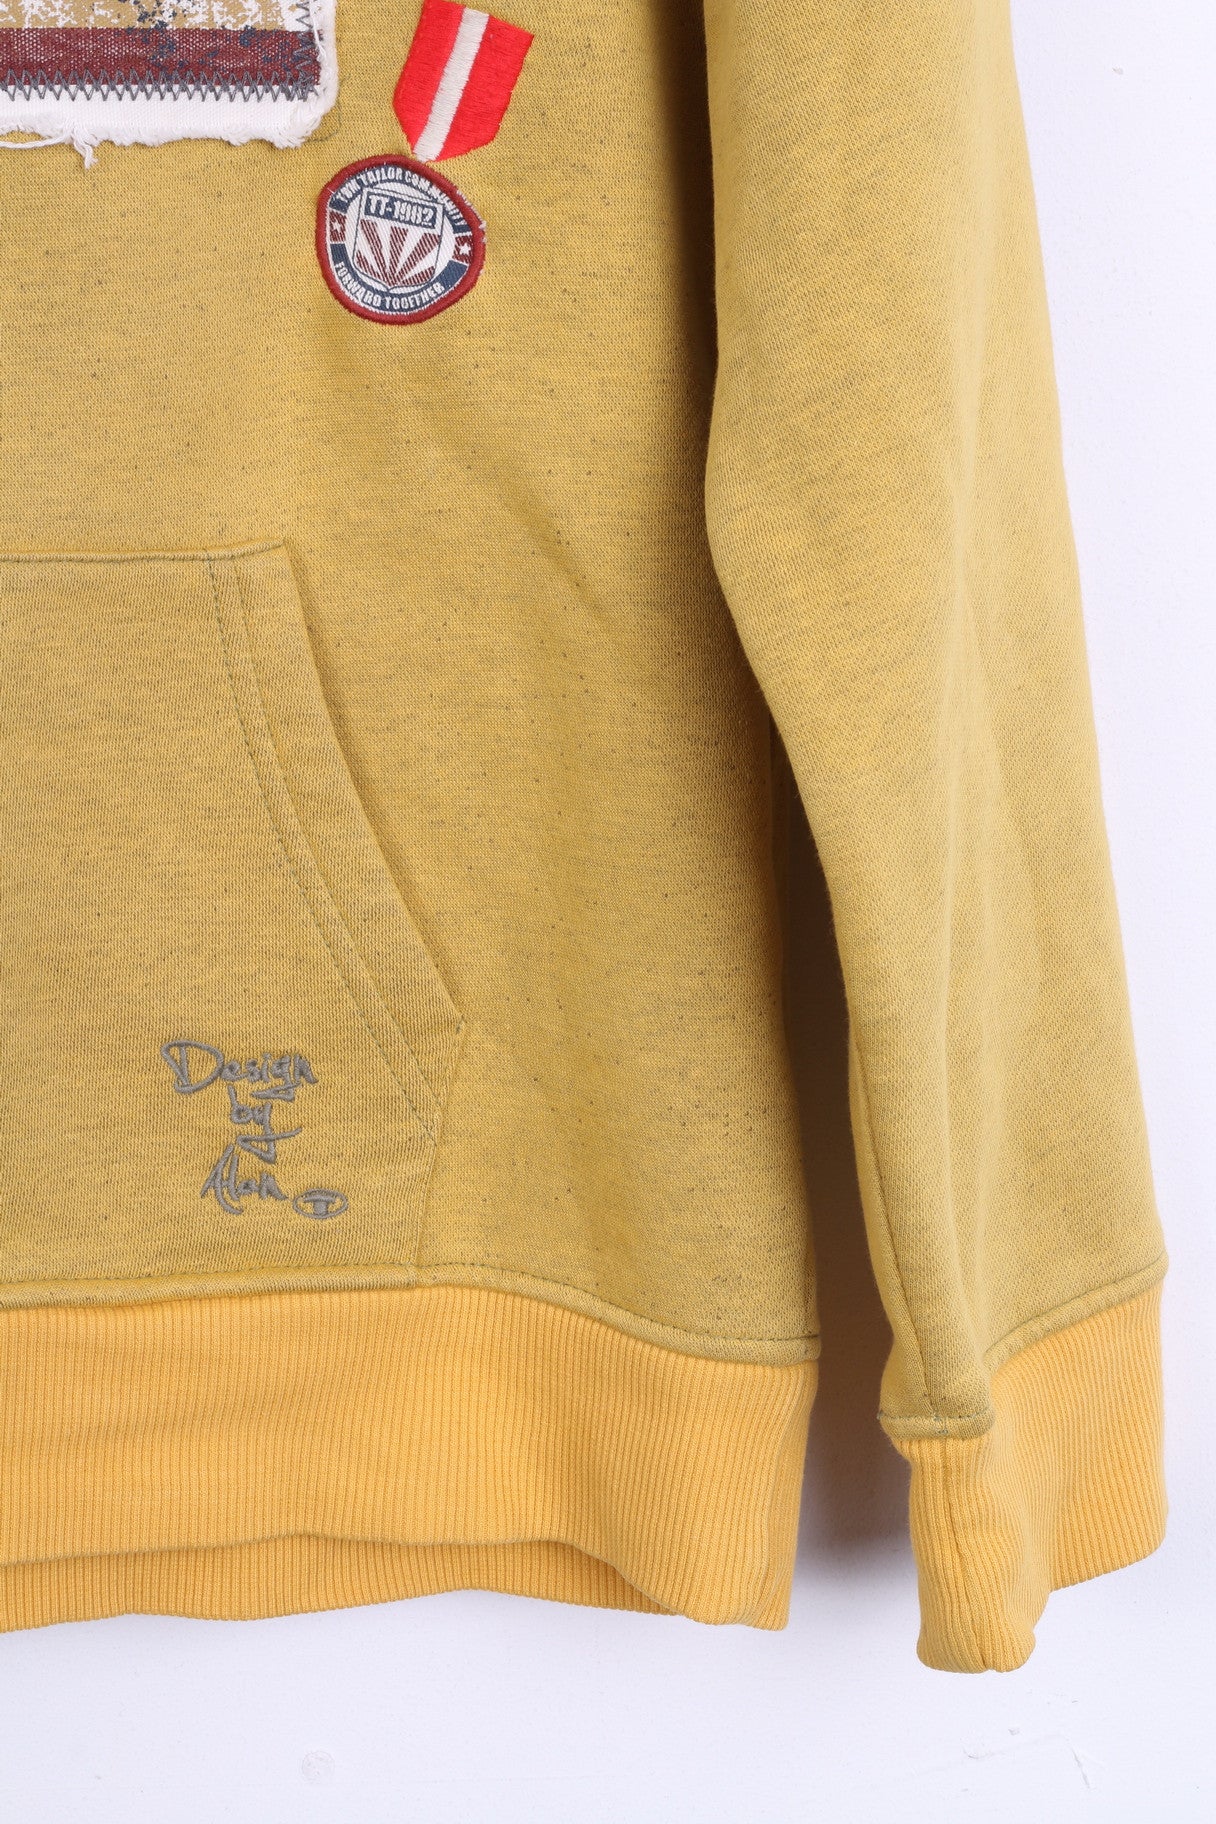 Tom Tailor Womens L Sweatshirt Yellow Hood Cotton Sport Kangaroo Pocket - RetrospectClothes